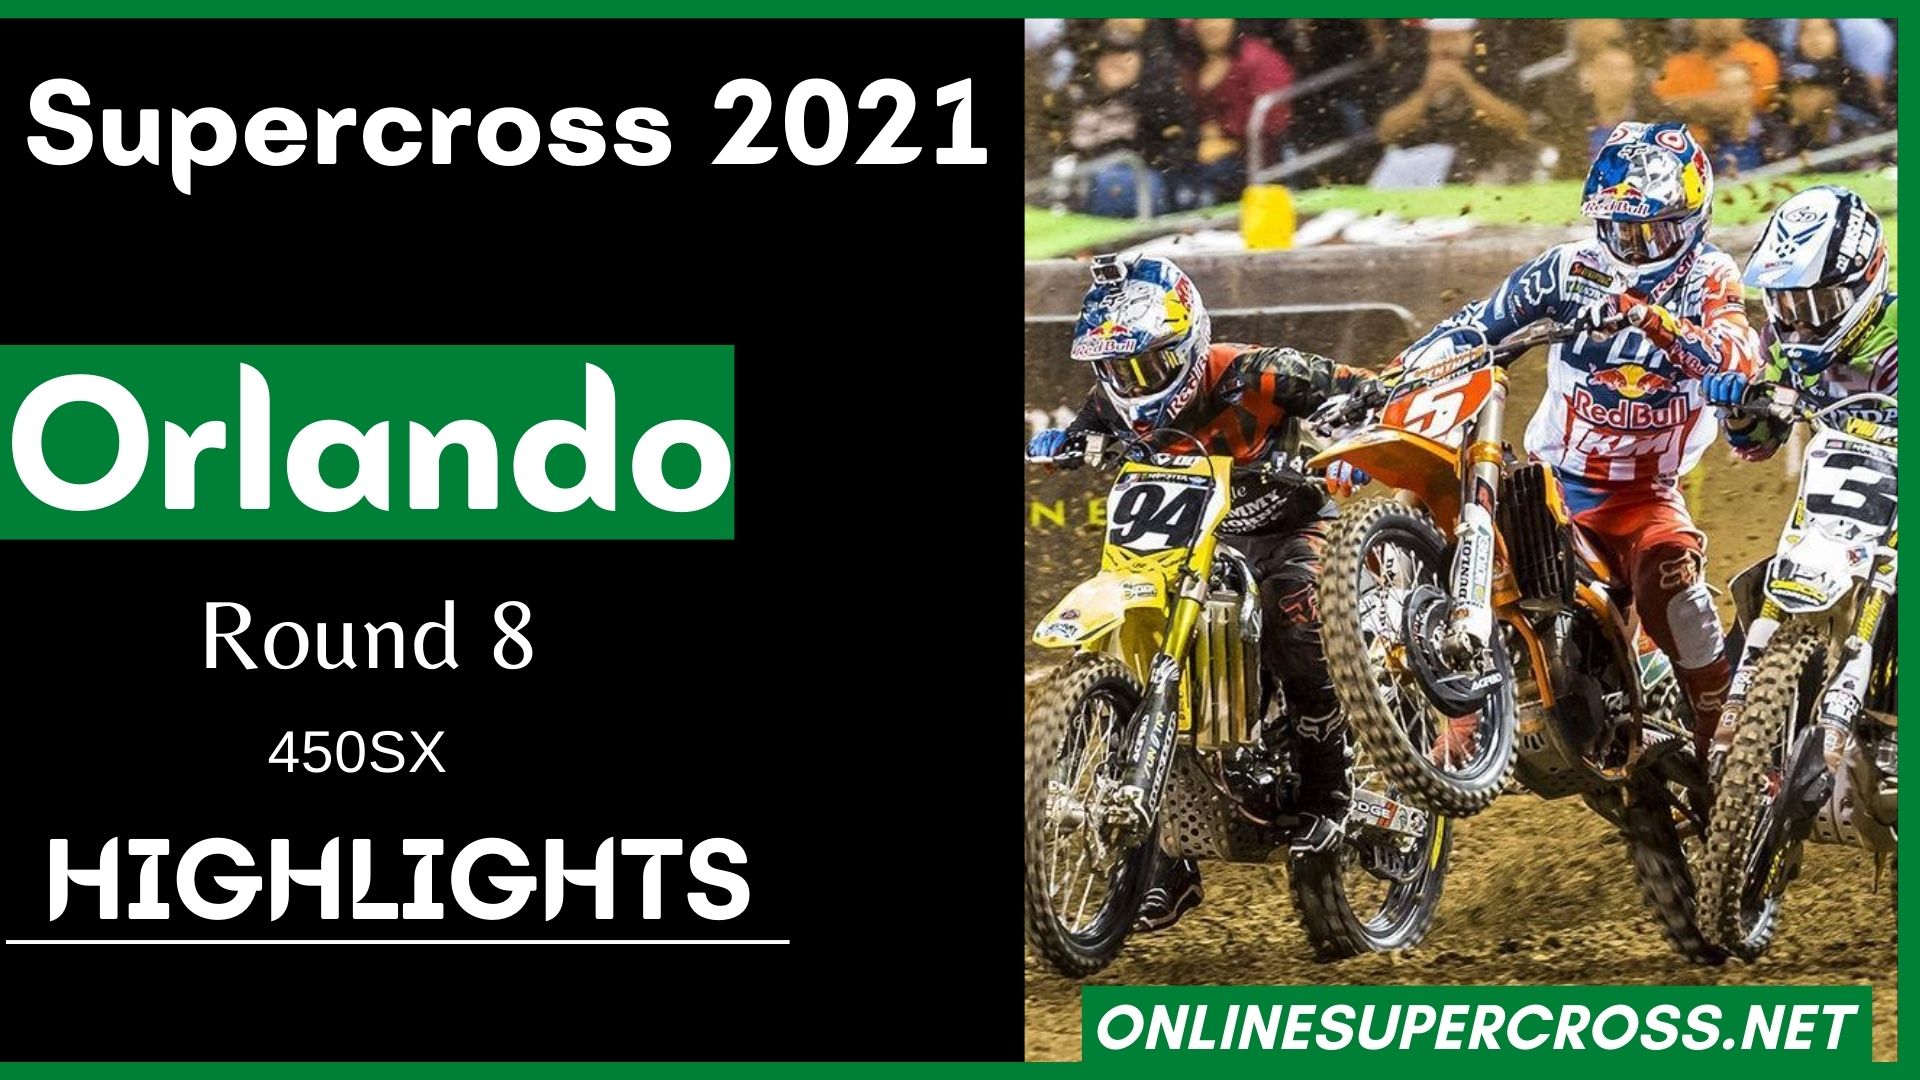 Orlando Round 8 450SX Highlights 2021 Supercross